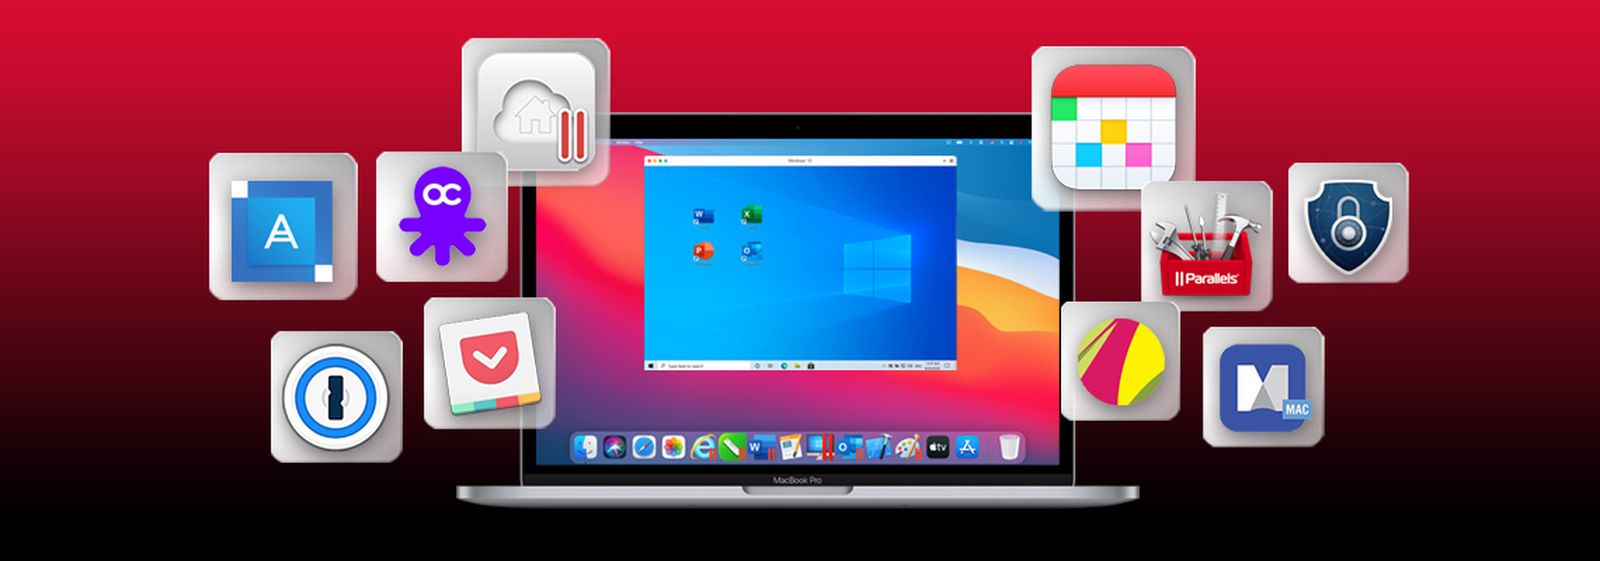 parallels desktop 12 for mac cheap